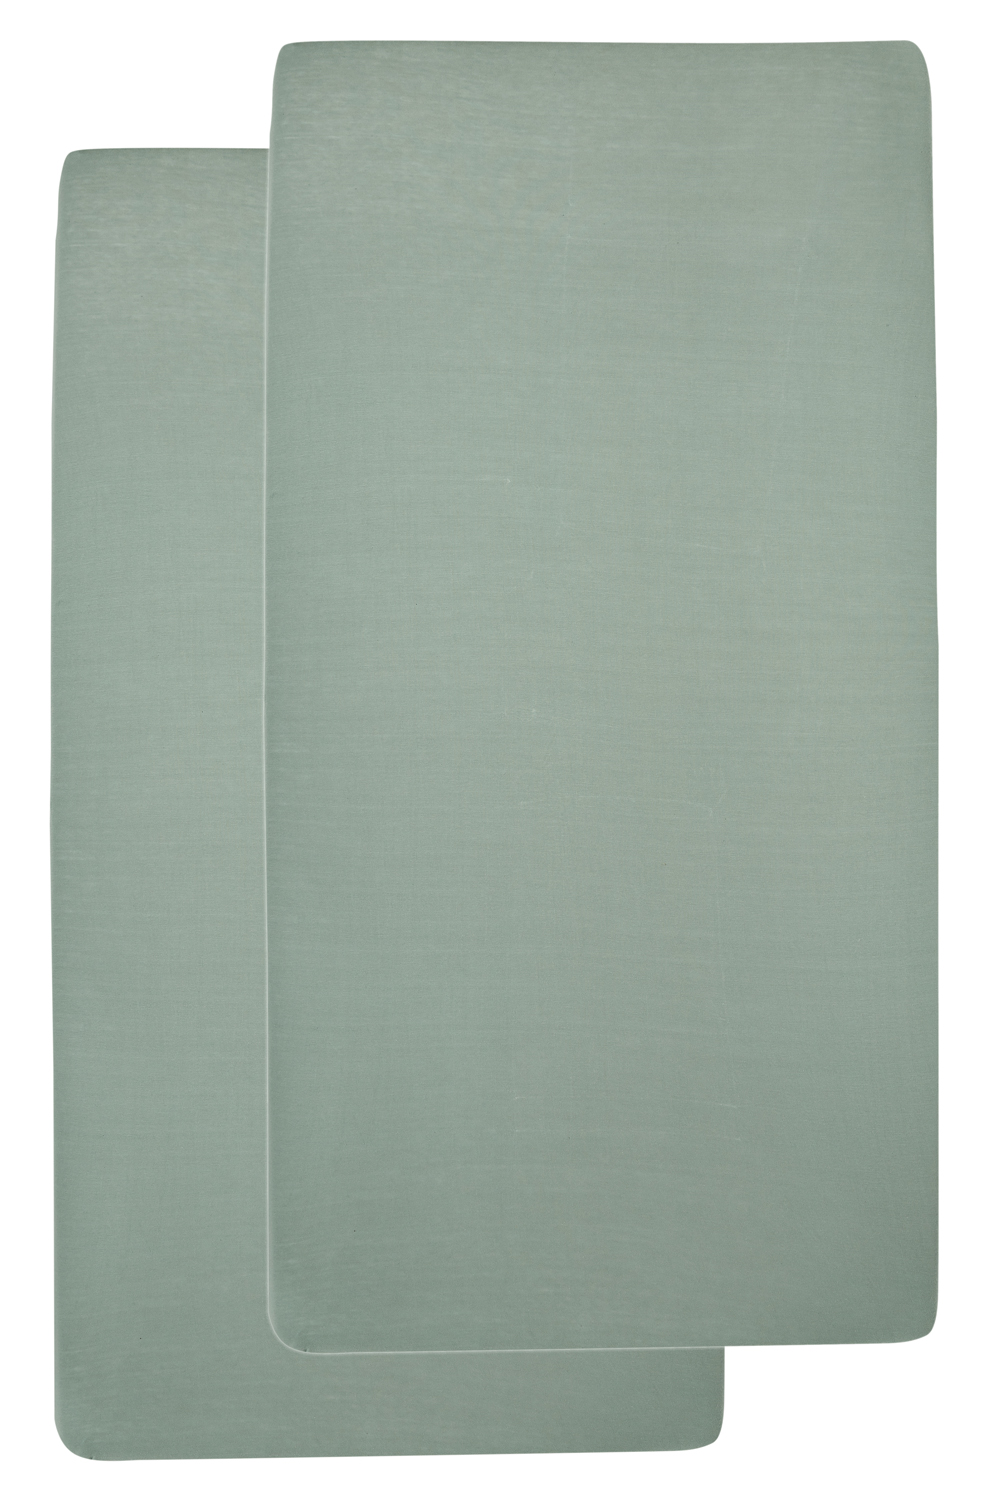 Jersey Hoeslaken 2-Pack - Stone Green - 70x140/150cm